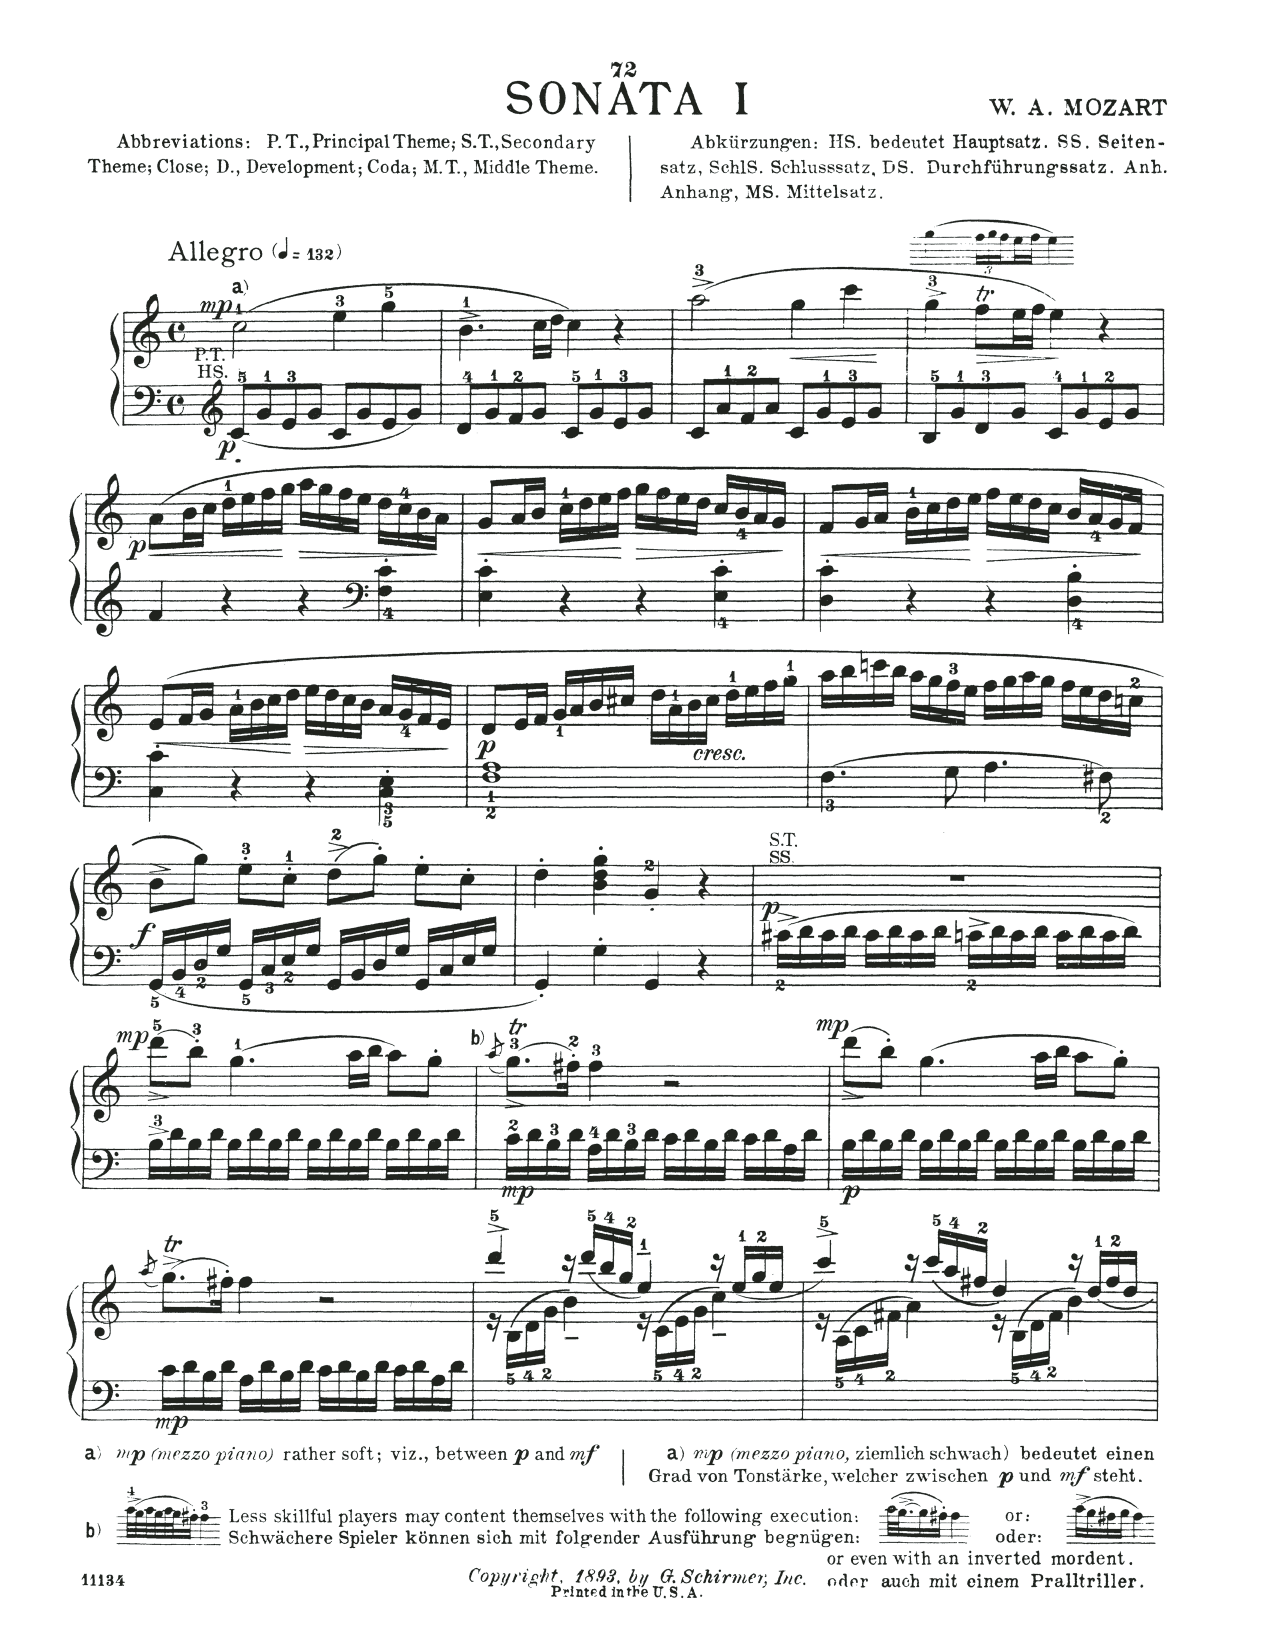 Franz Joseph Haydn Sonata In C Major, Hob. XVI: 35 sheet music notes and chords arranged for Piano Solo